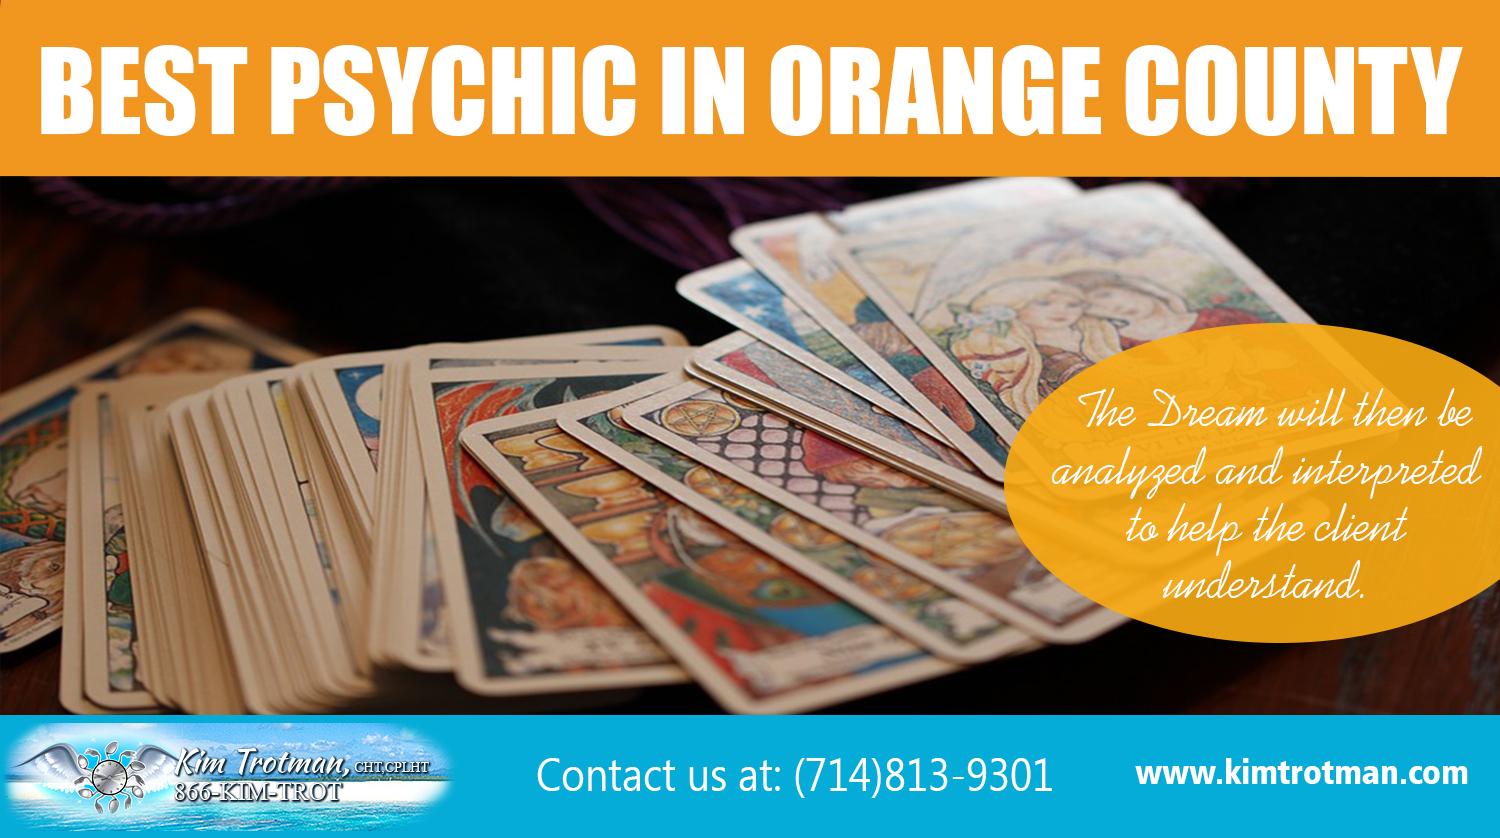  best psychic in orange county2